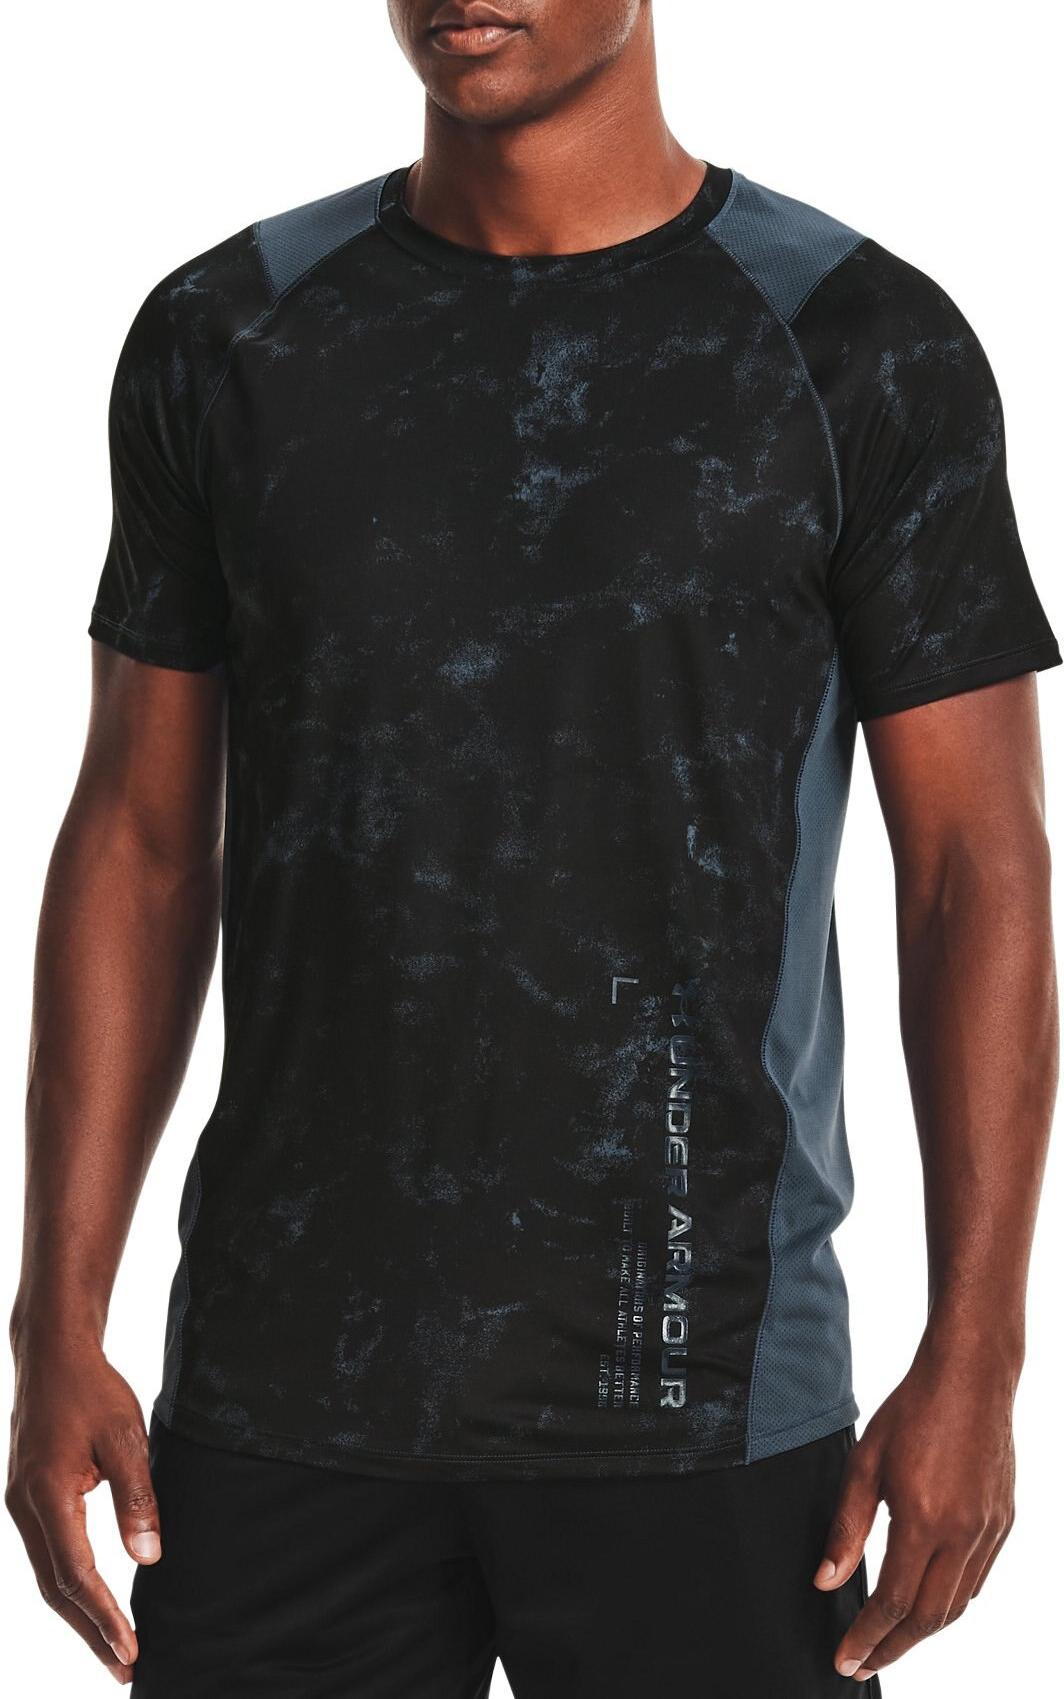 Polvoriento cálmese portón T-shirt Under Armour UA MK-1 Graphic SS - Top4Running.com